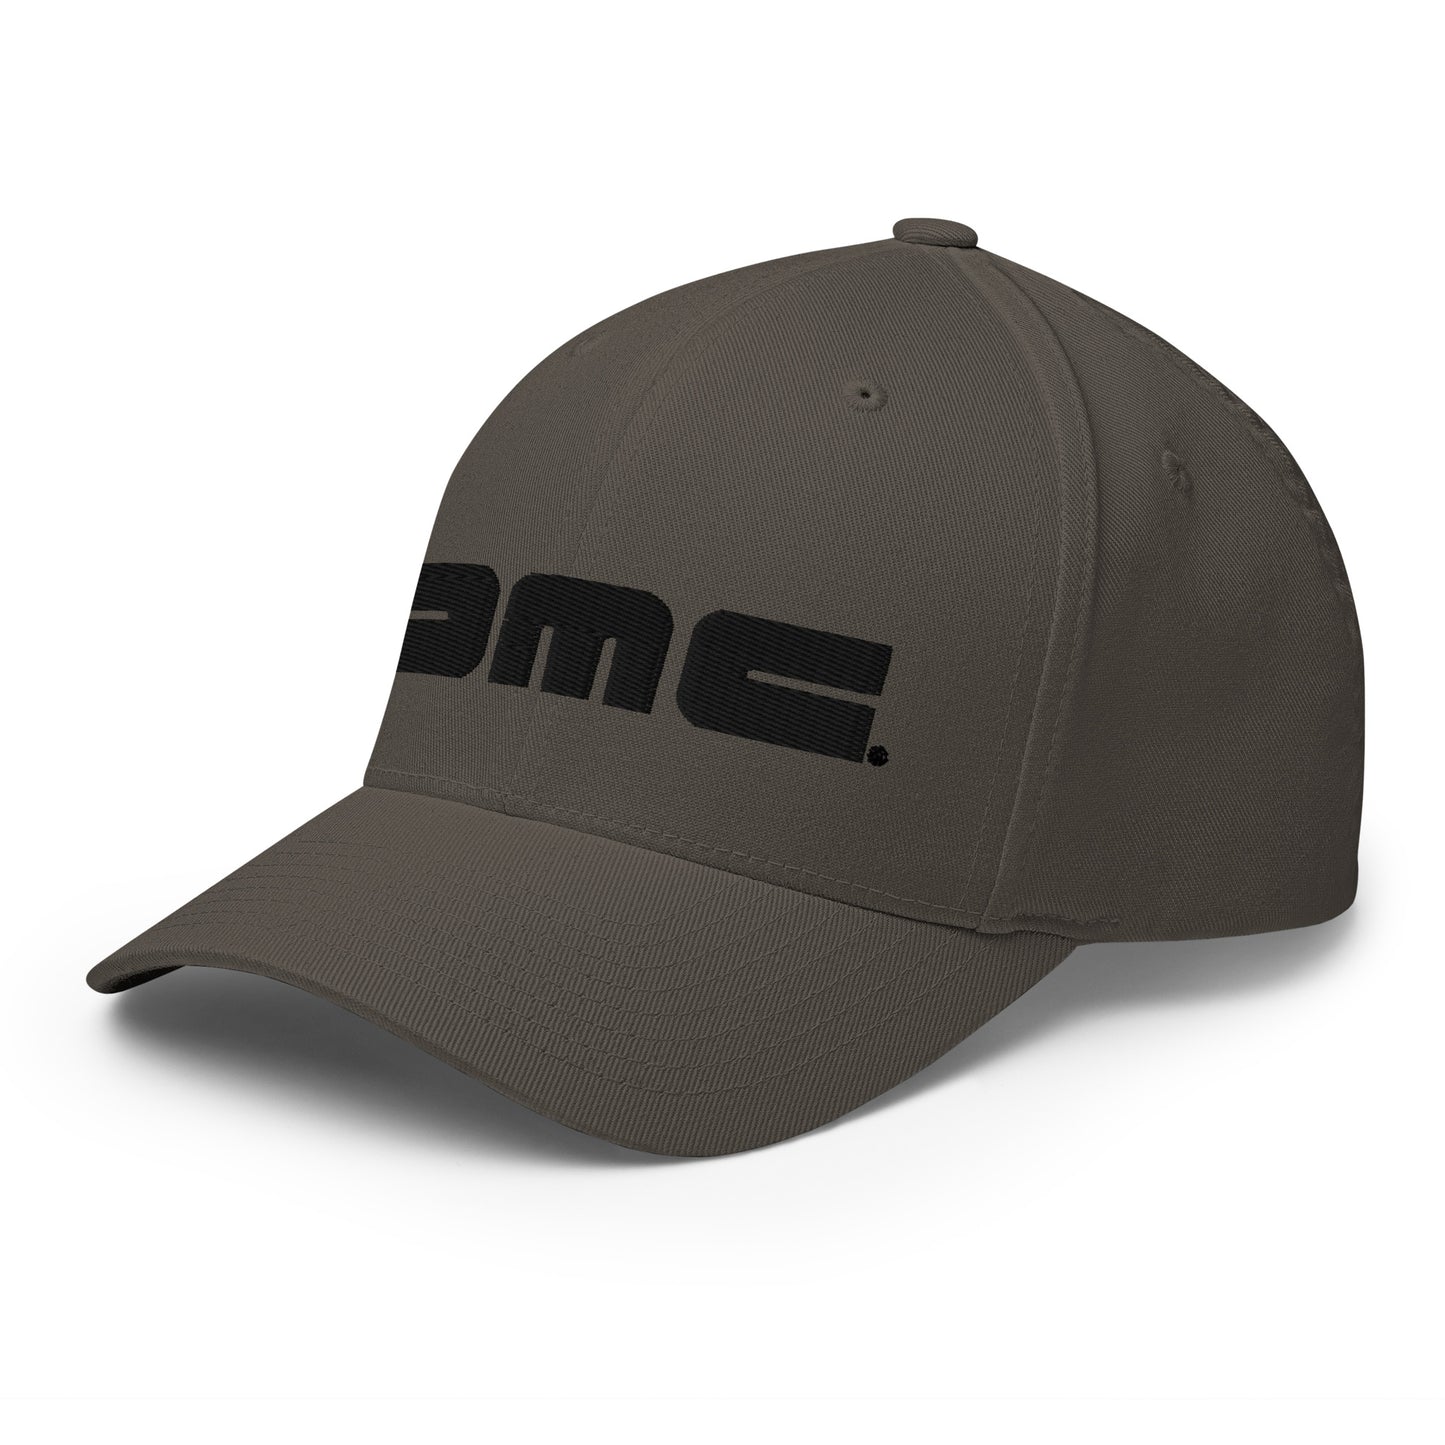 DMC Logo Twill Cap (Black Embroidery)